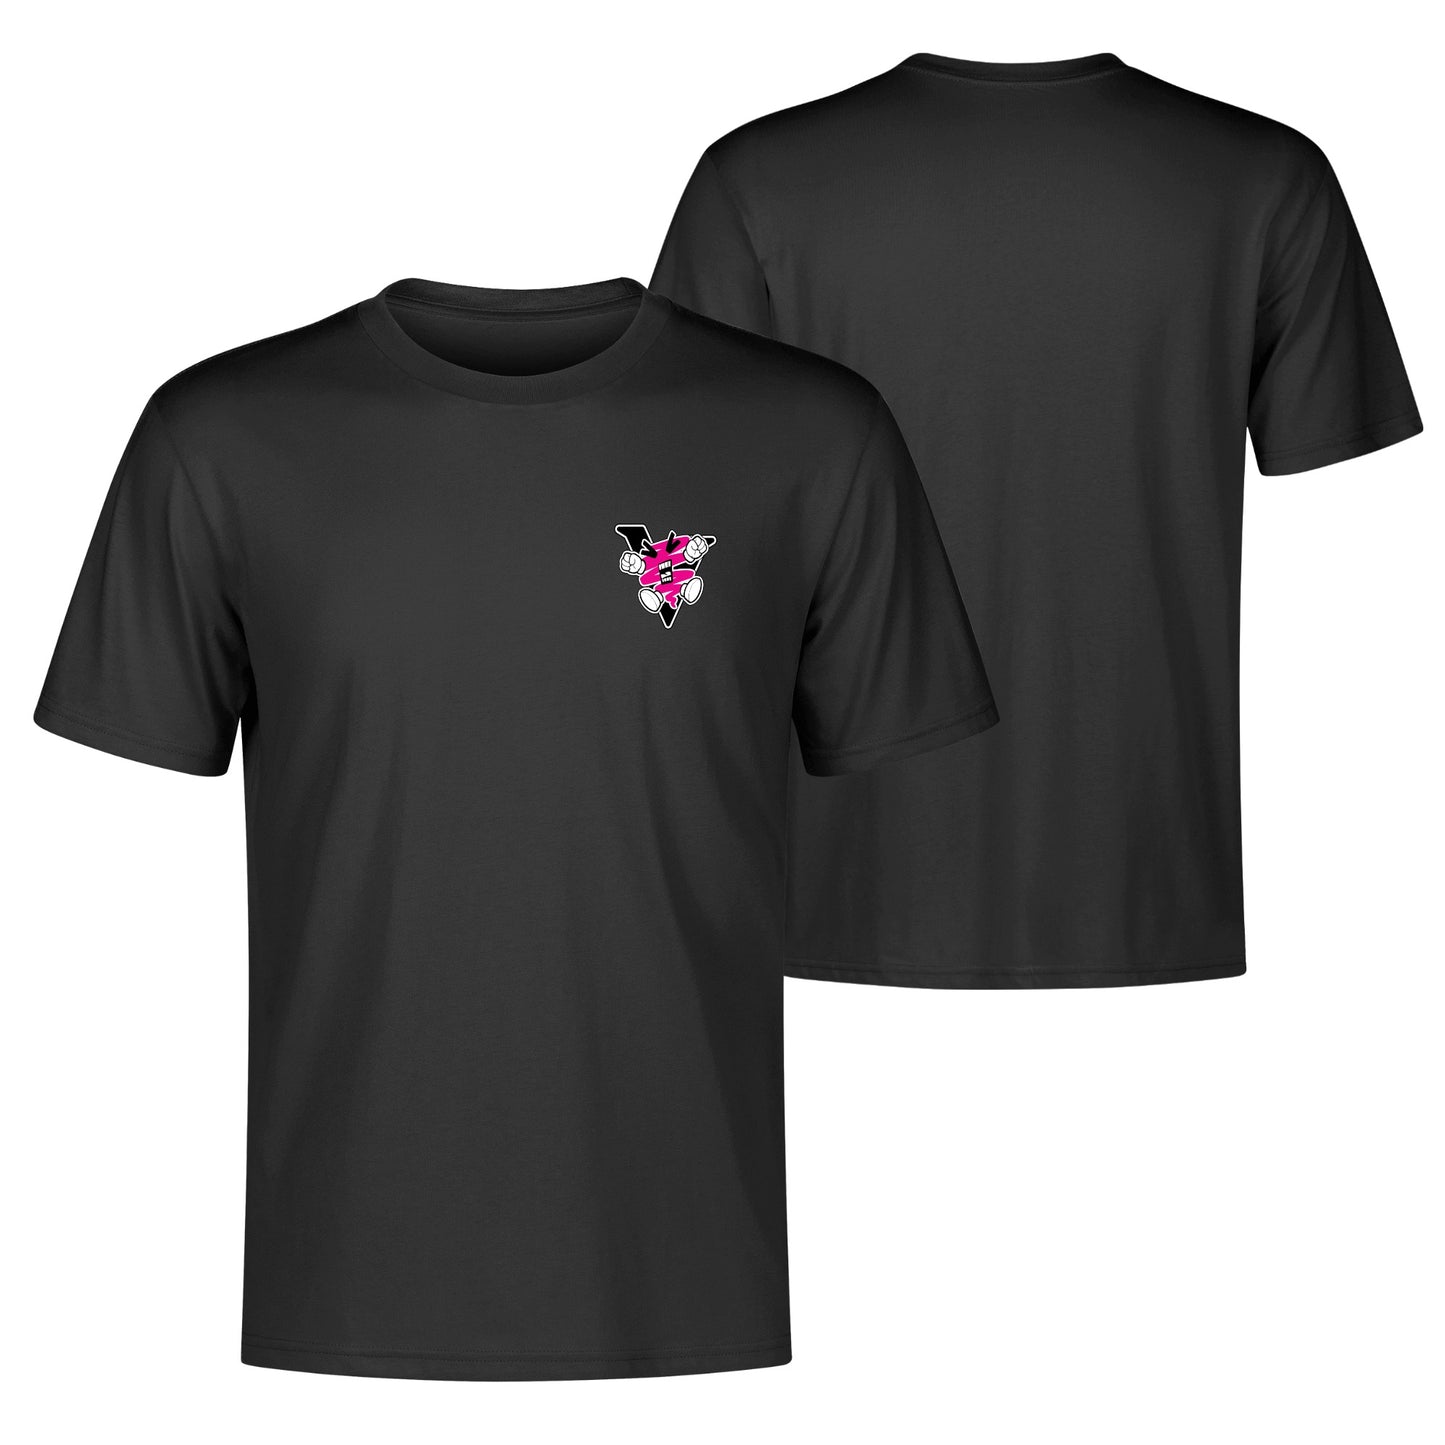 Versus Vortex Colour T Shirt